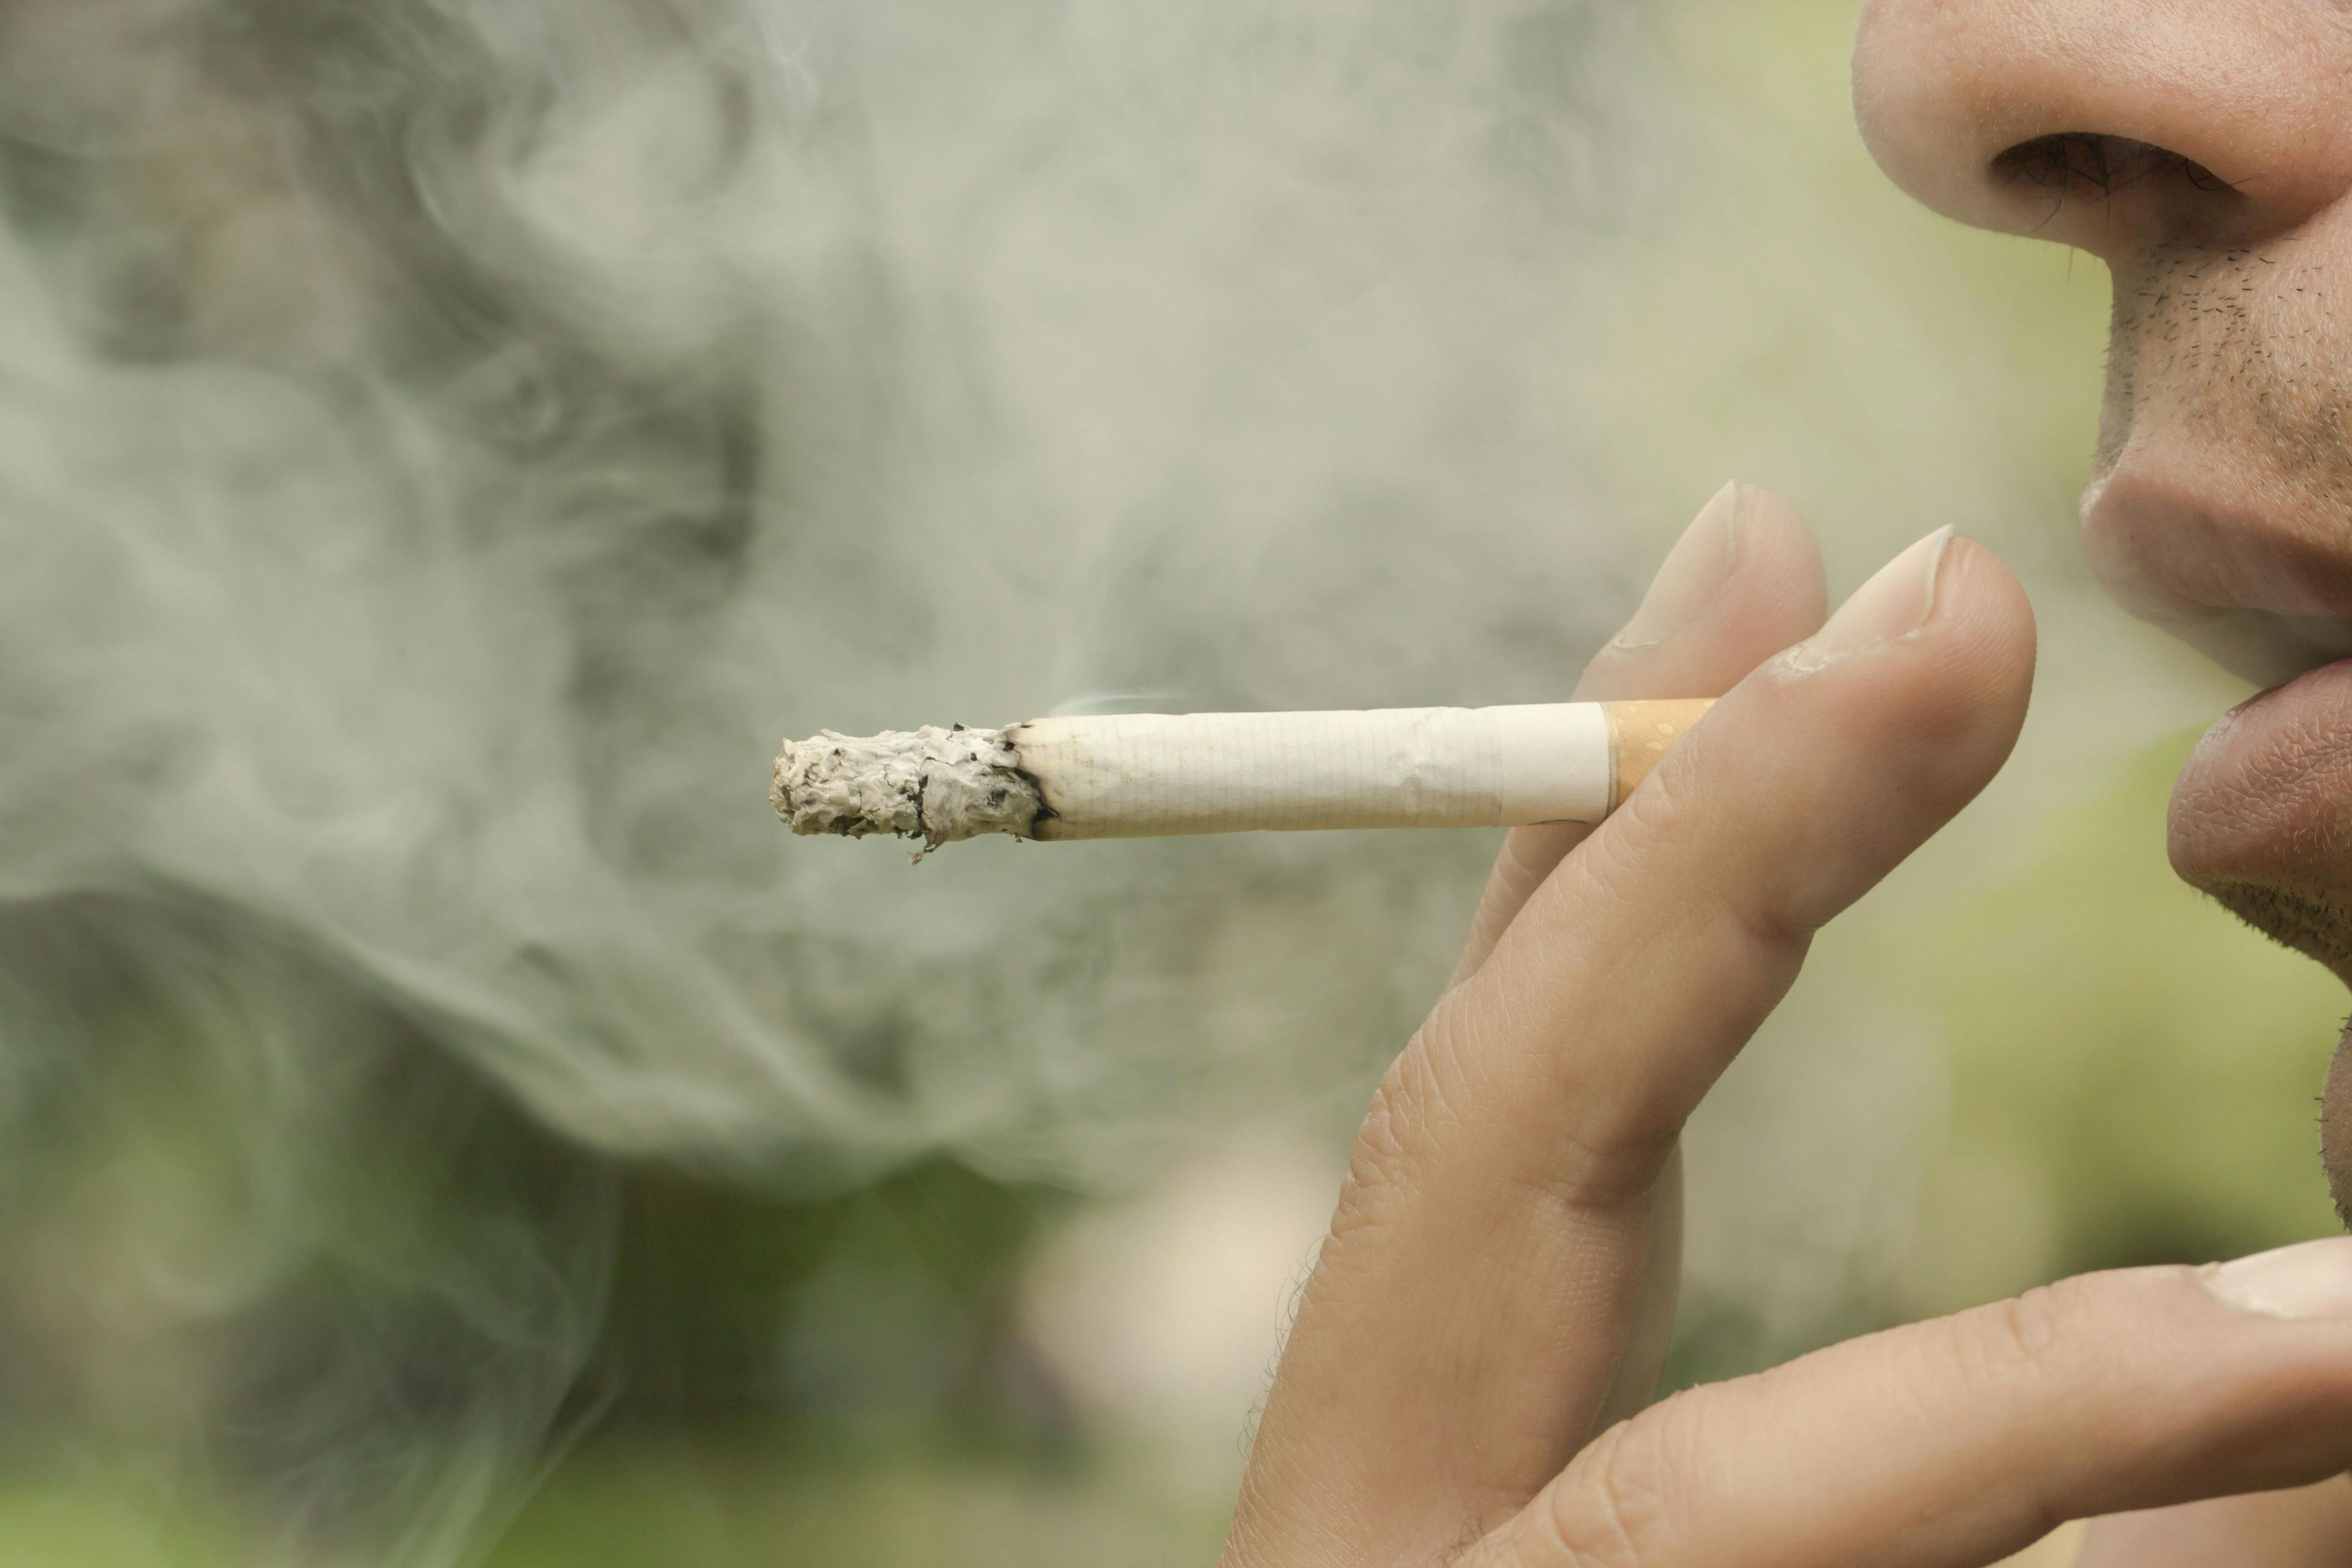 cigarette smoker | Image Credit: ehabeljean - stock.adobe.com